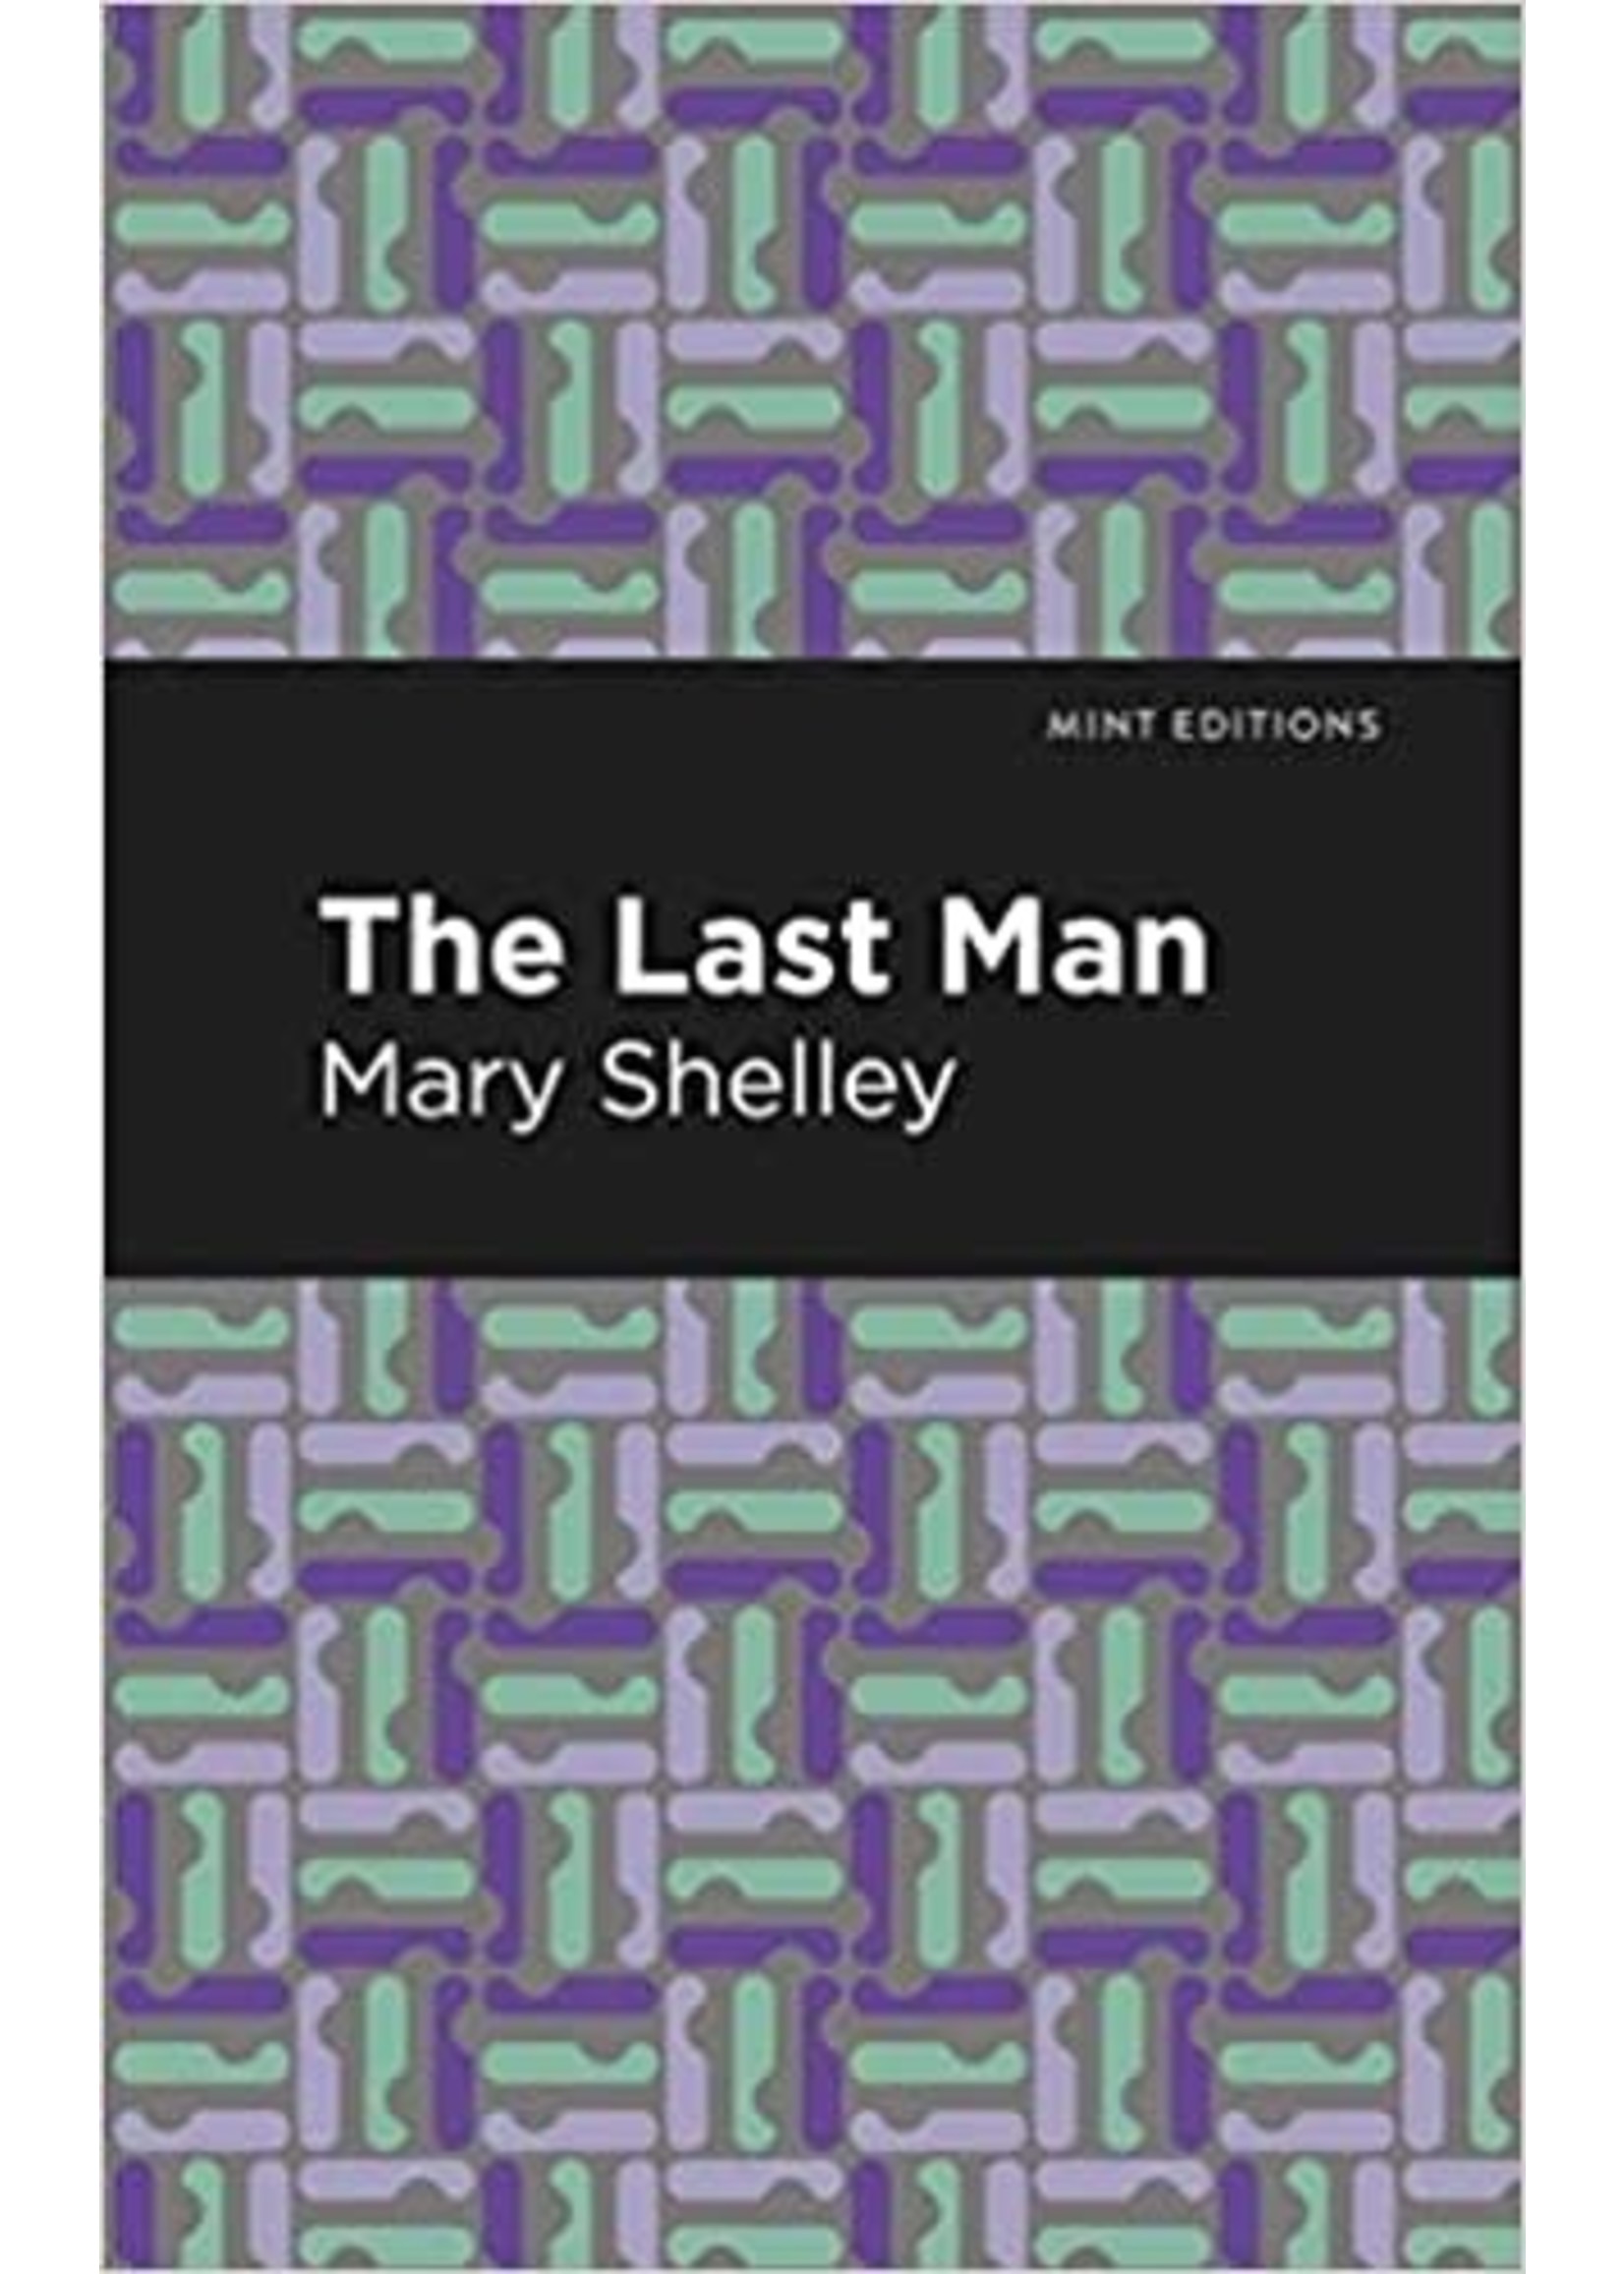 The Last Man by Mary Wollstonecraft Shelley